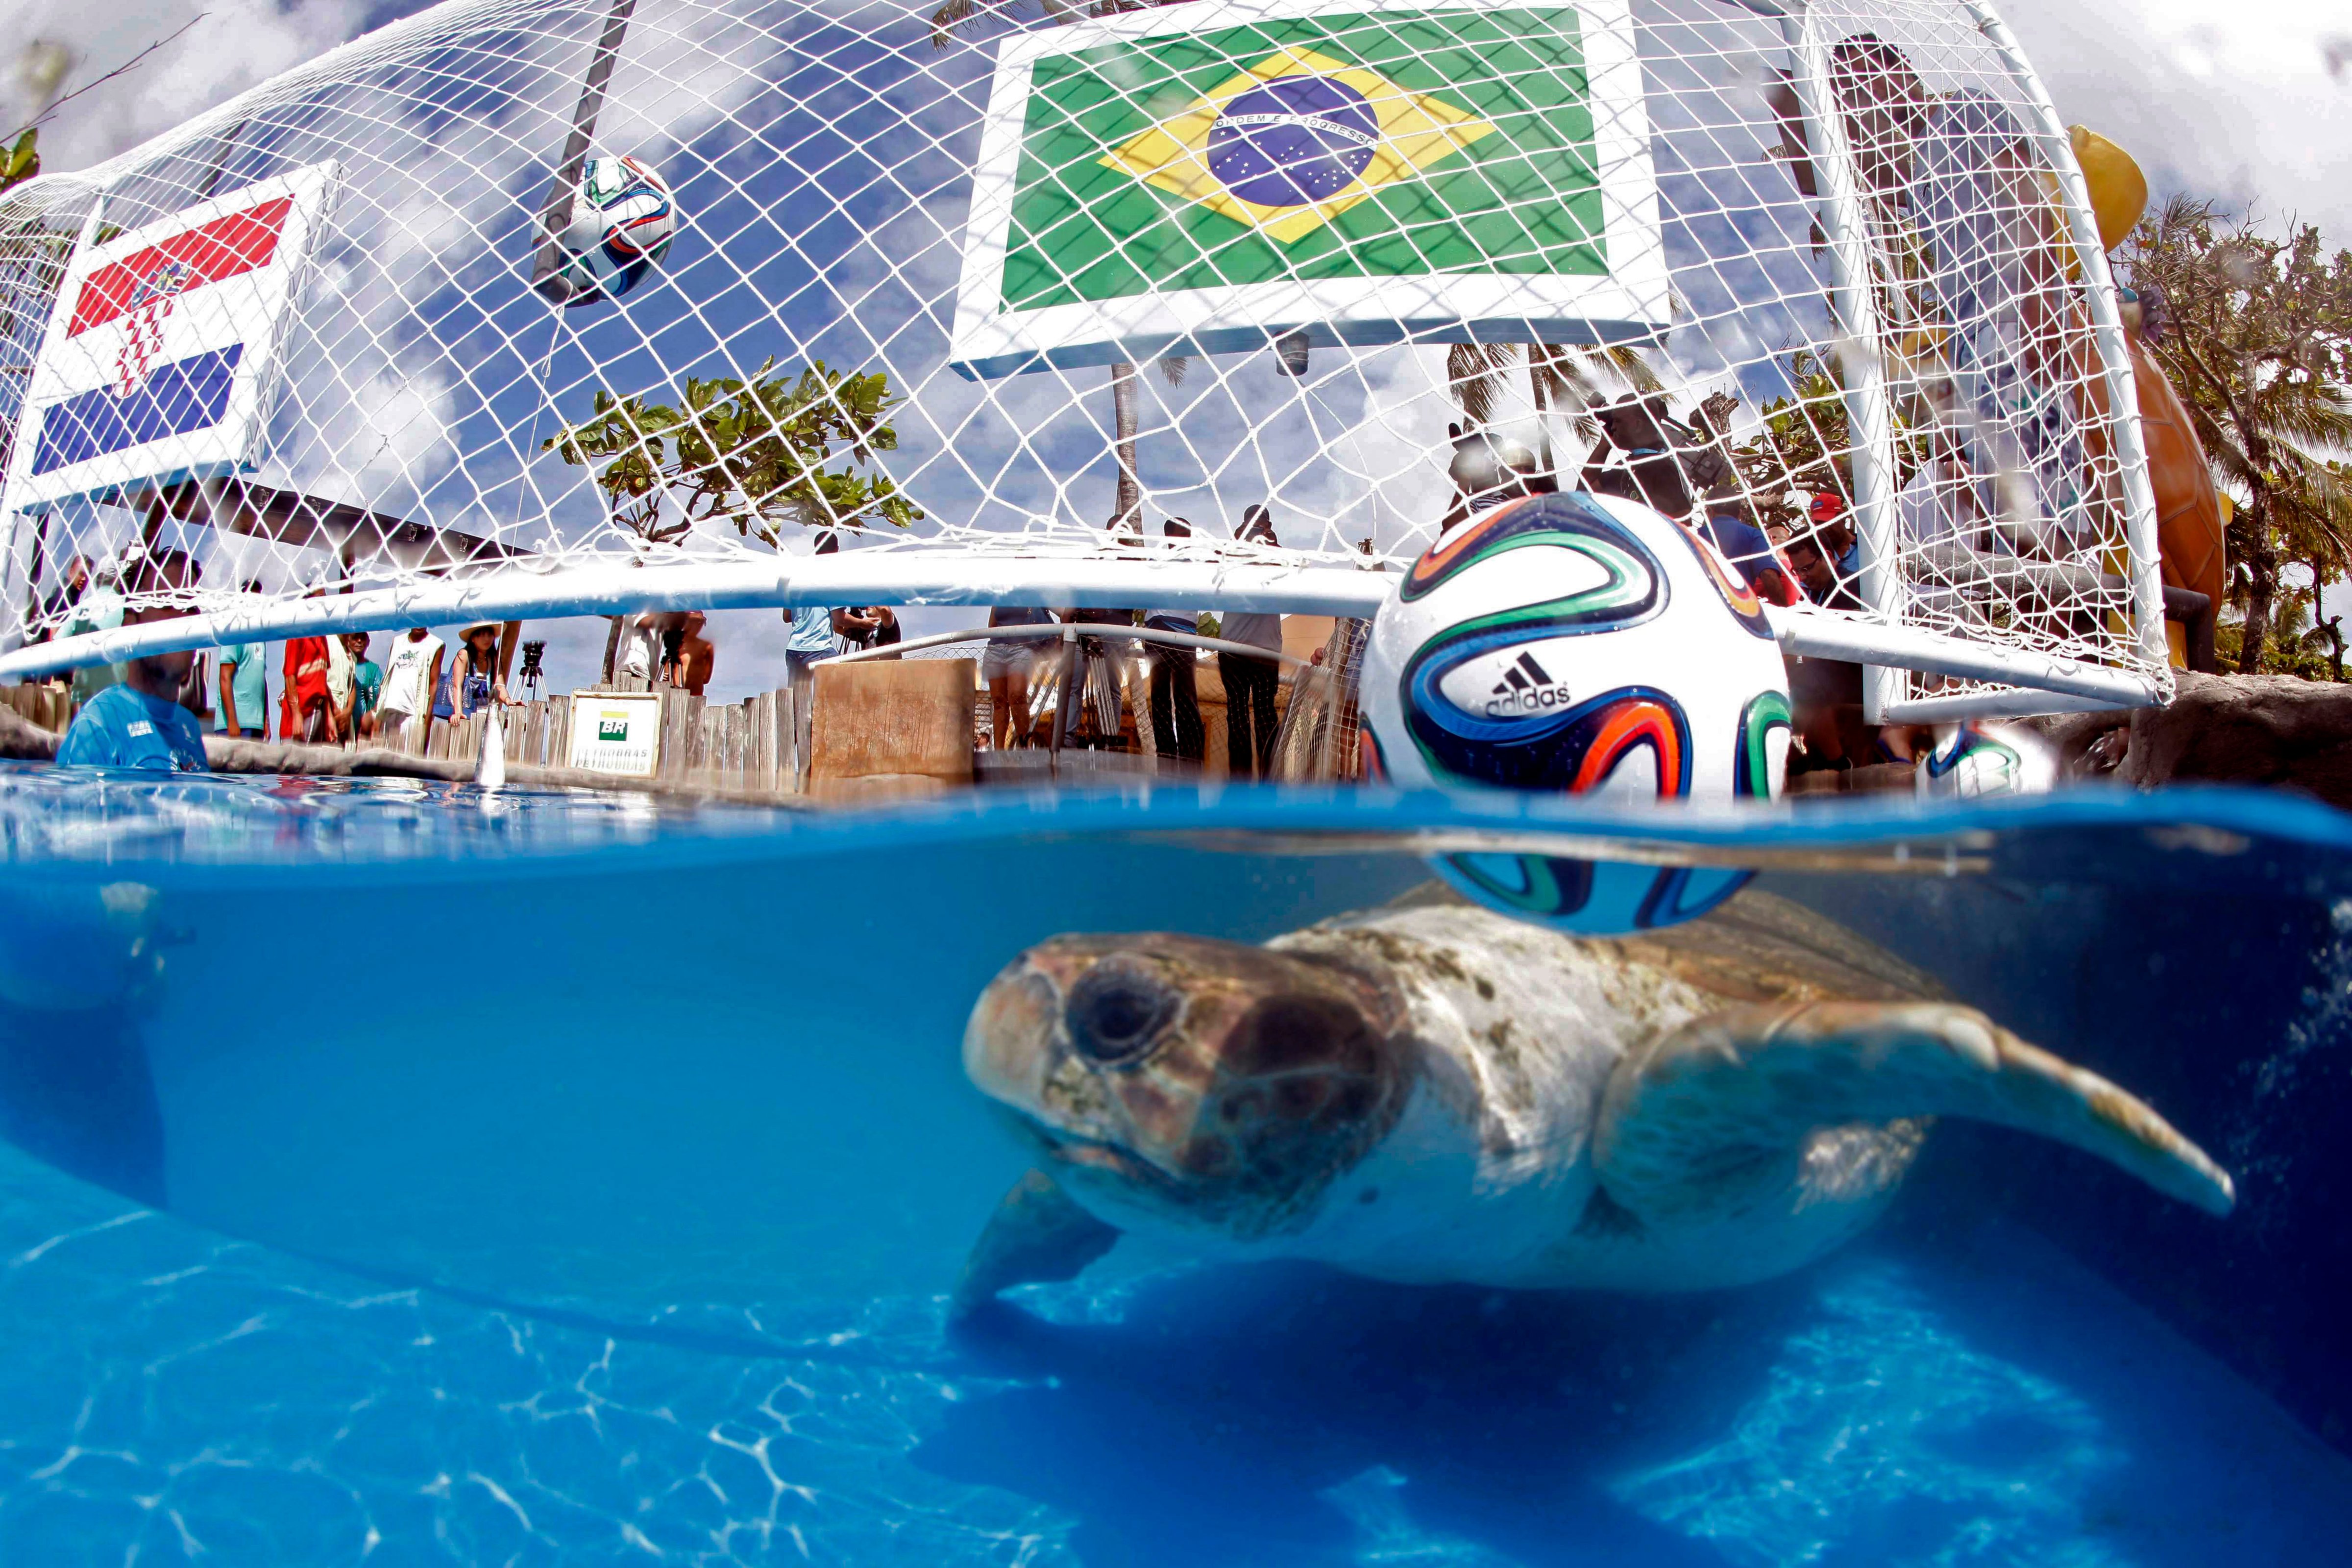 A turtle named Cabeção, or Big Head, swims in a pool in Praia do Forte, Brazil, Tuesday, June 10, 2014. (Lucio Tavora—AP)